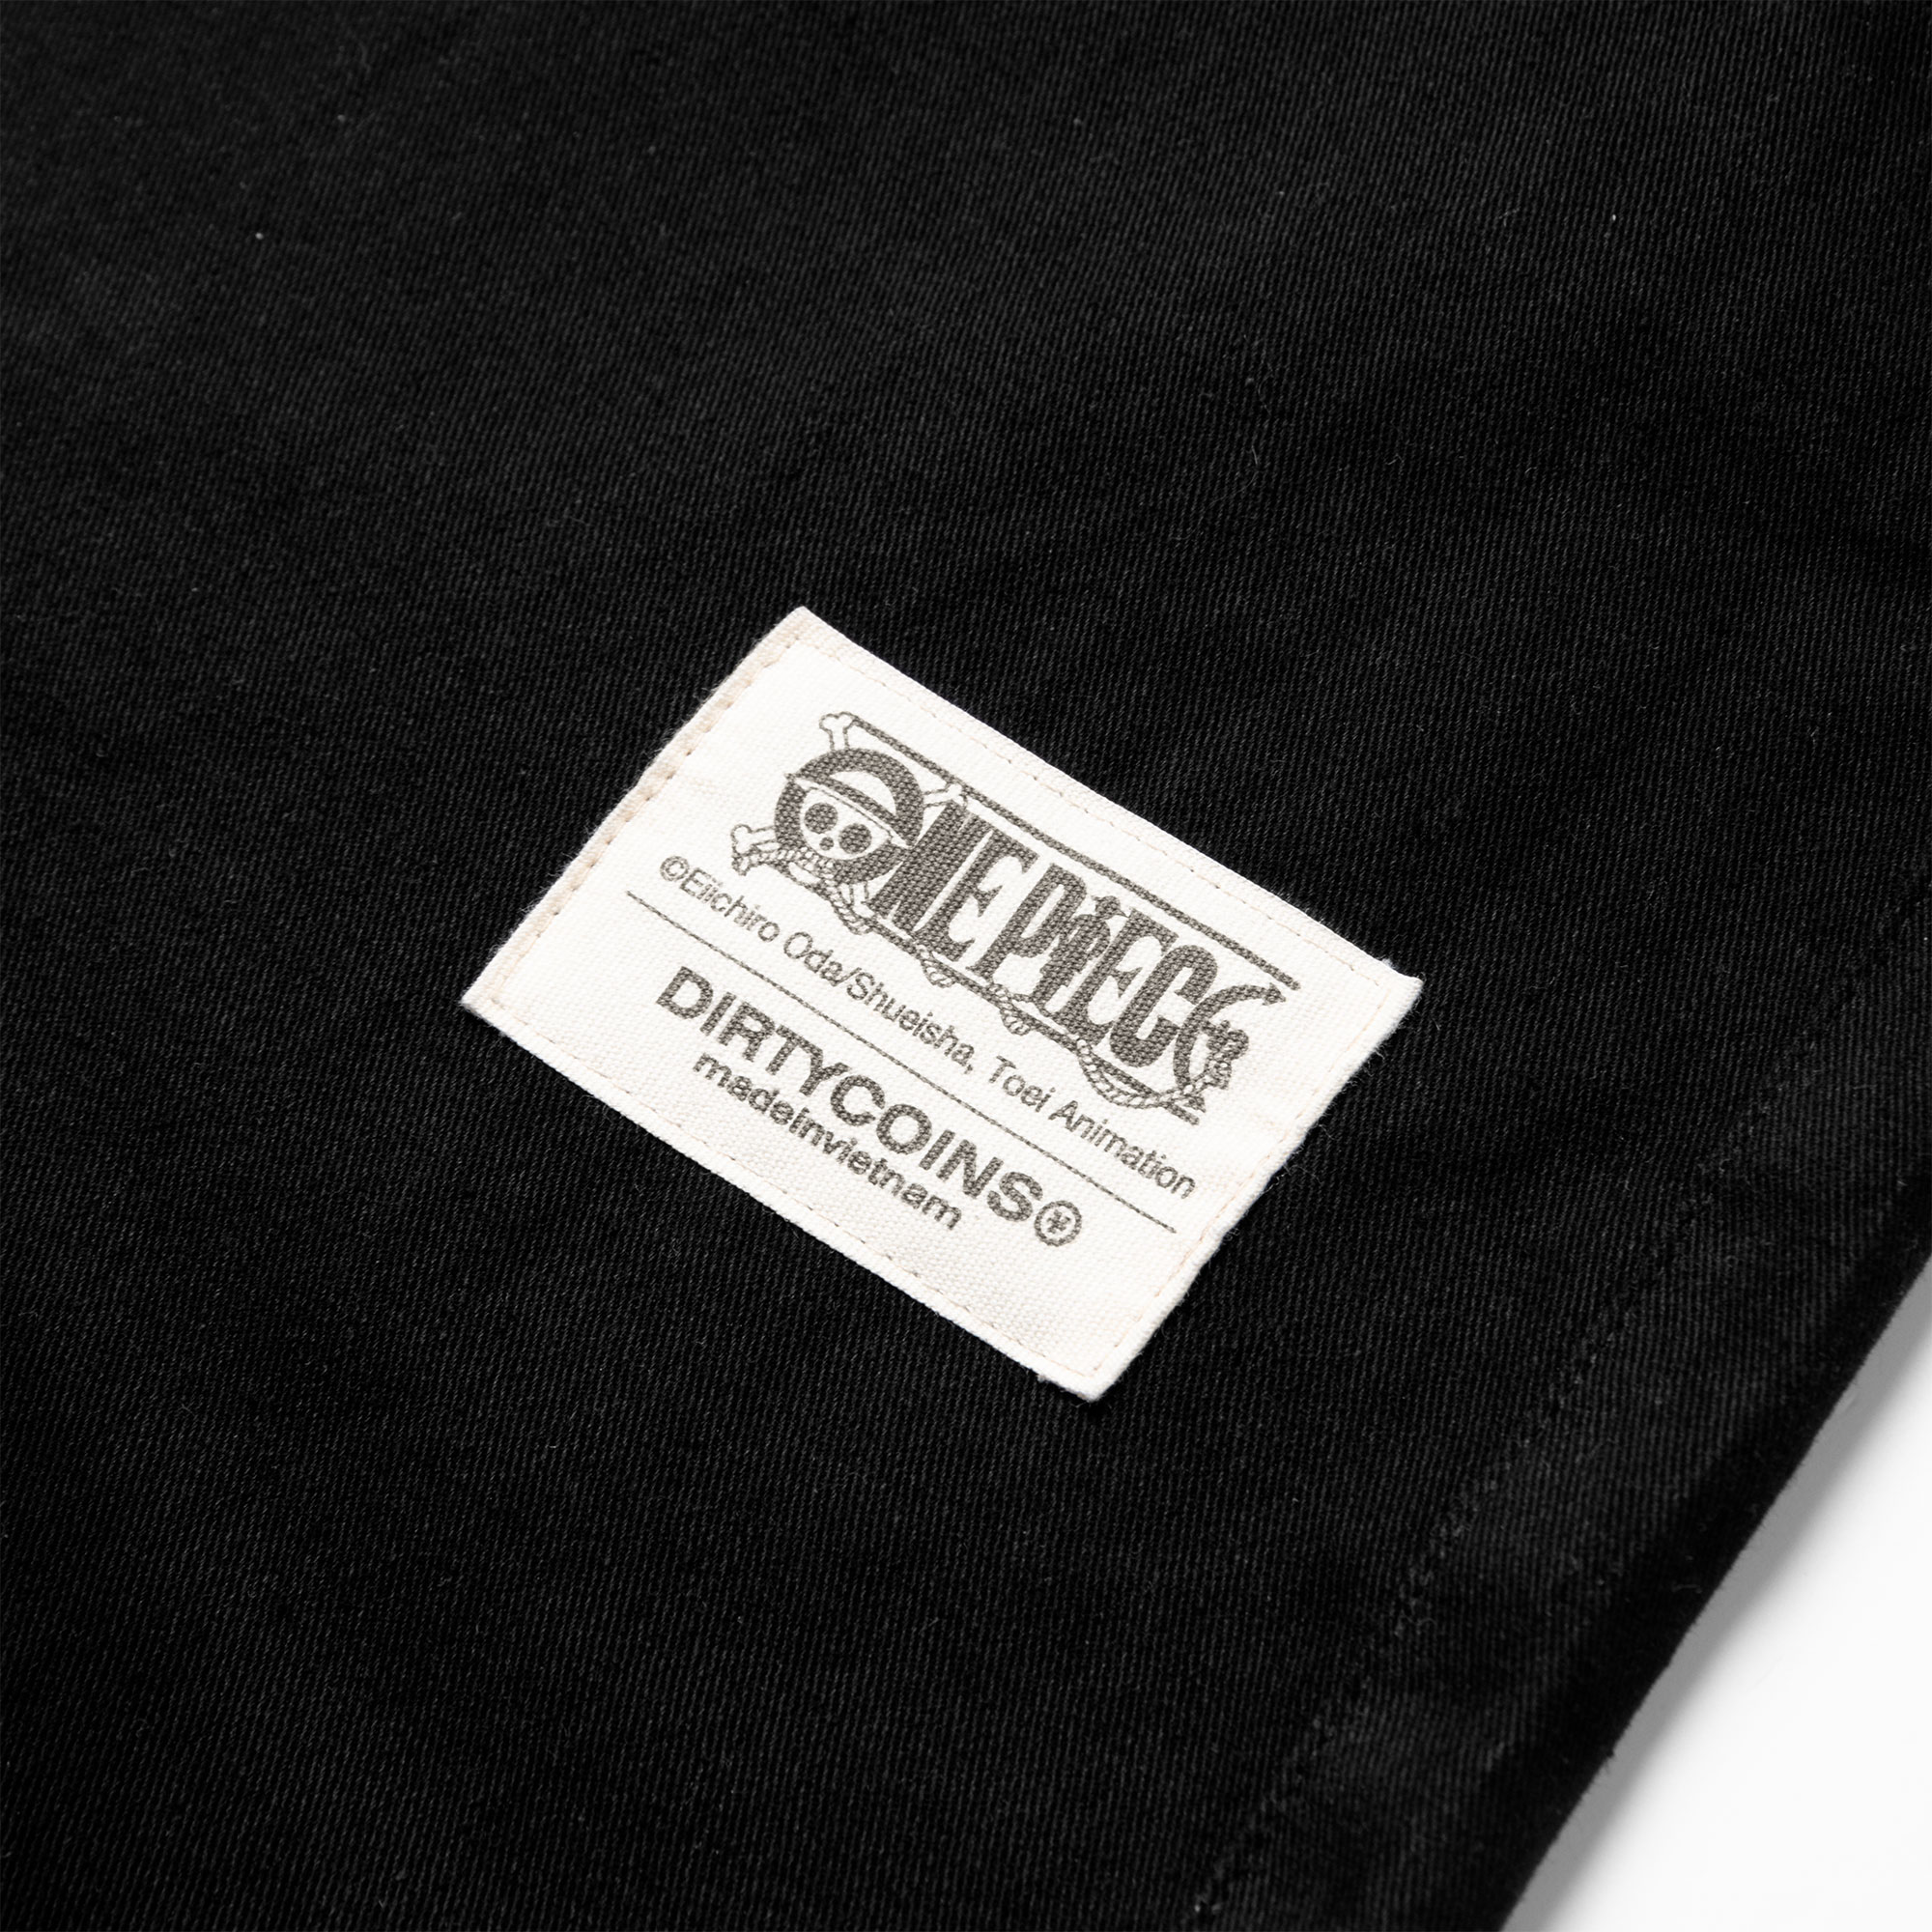 Quần DirtyCoins x One Piece Logo Print Khaki Pants - Black